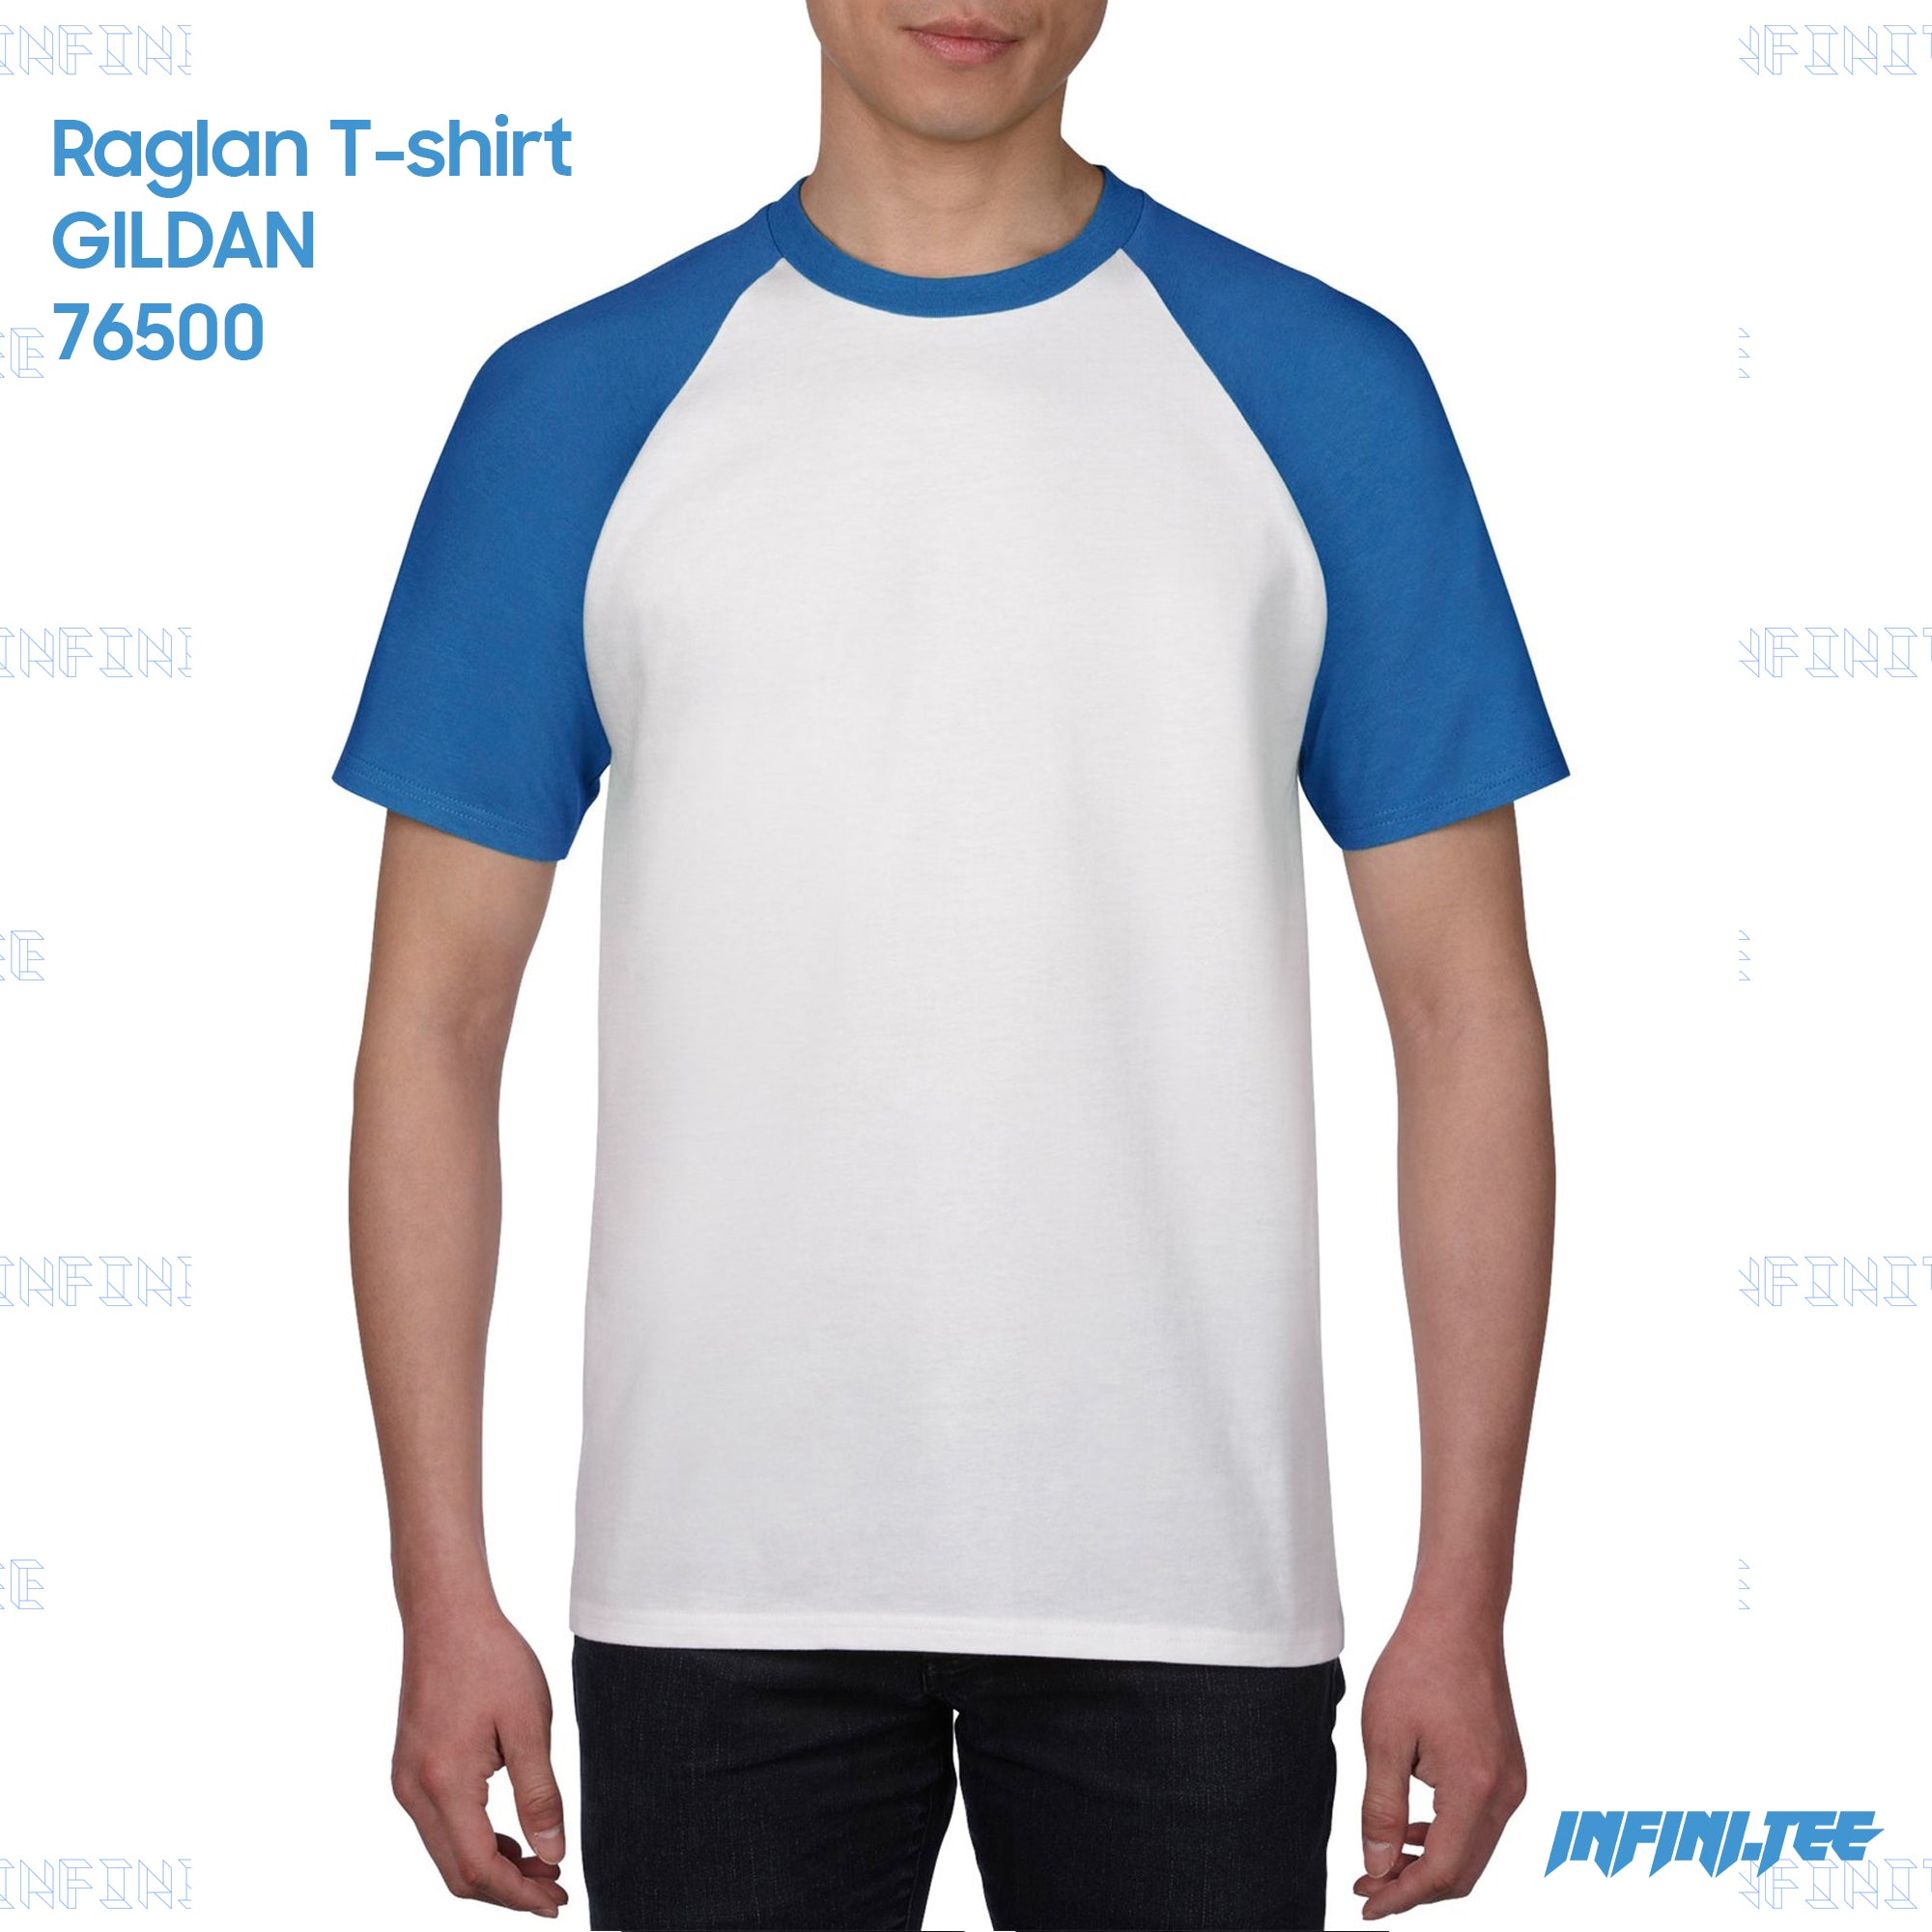 RAGLAN T-shirt 76500 GILDAN - WHITE/ROYAL